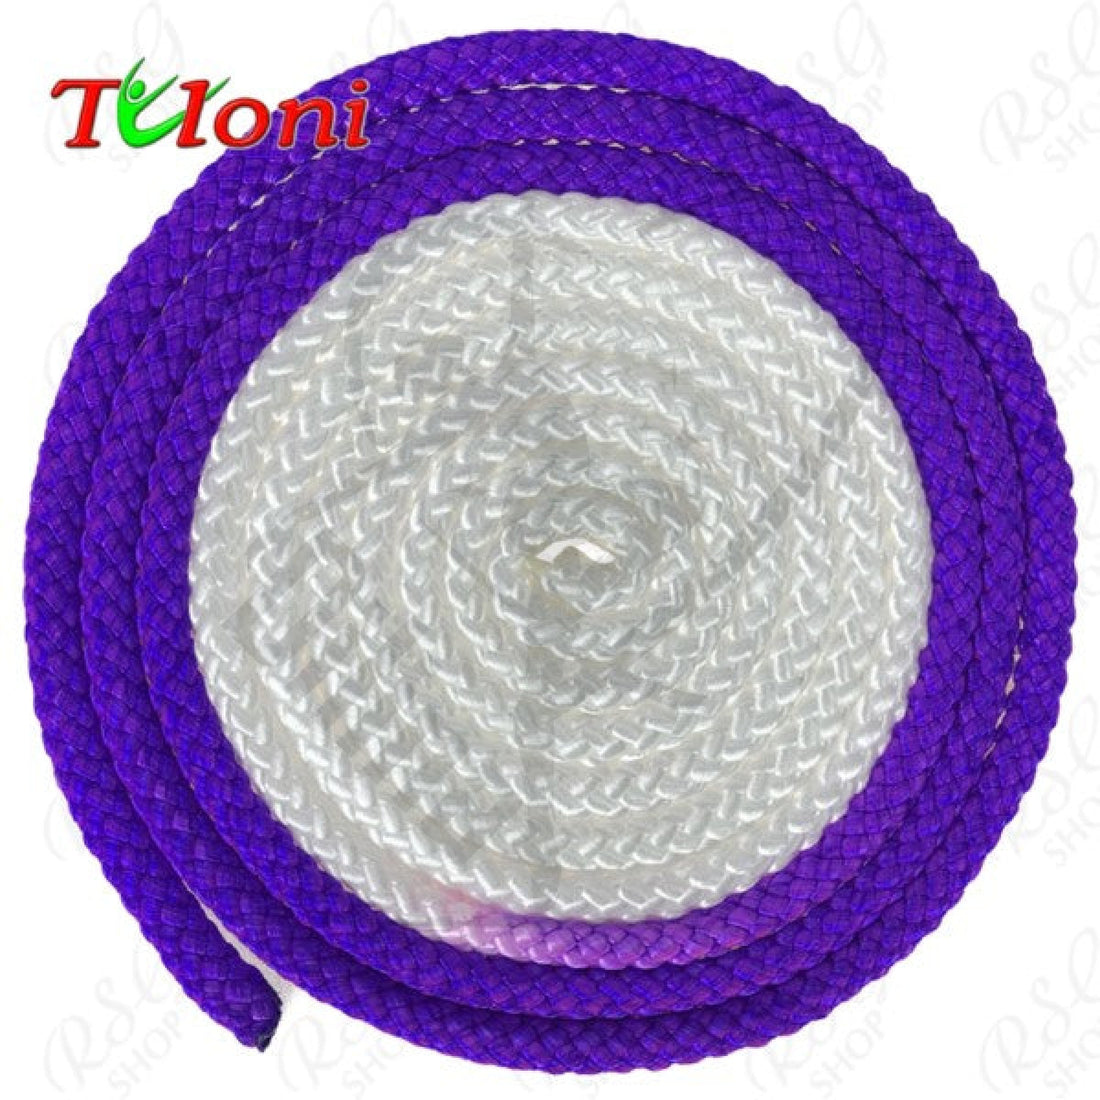 Tuloni Multicolour Rope 3M Violet X White Ropes